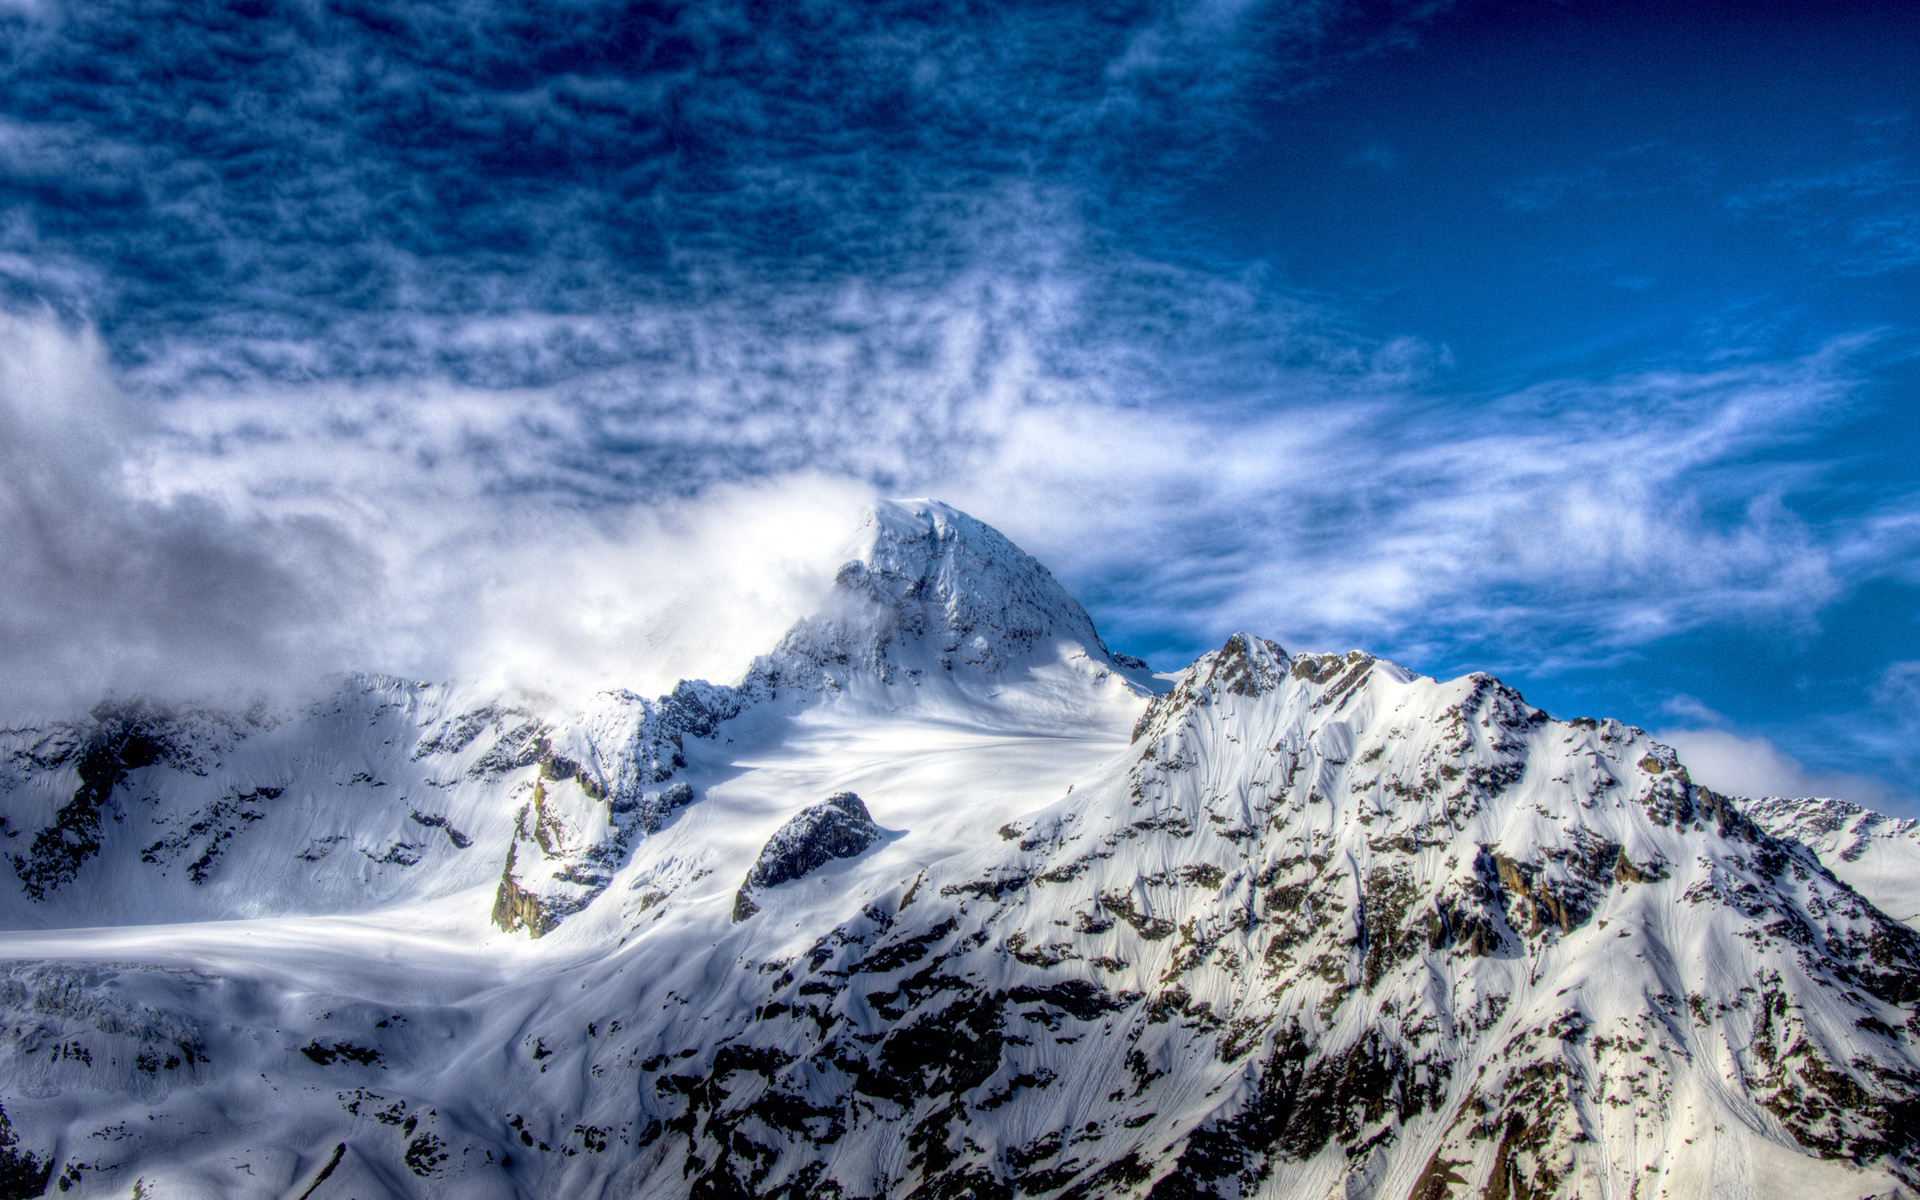  Background کولاک و سرما میان کوه ها در فصل زیبای زمستان 